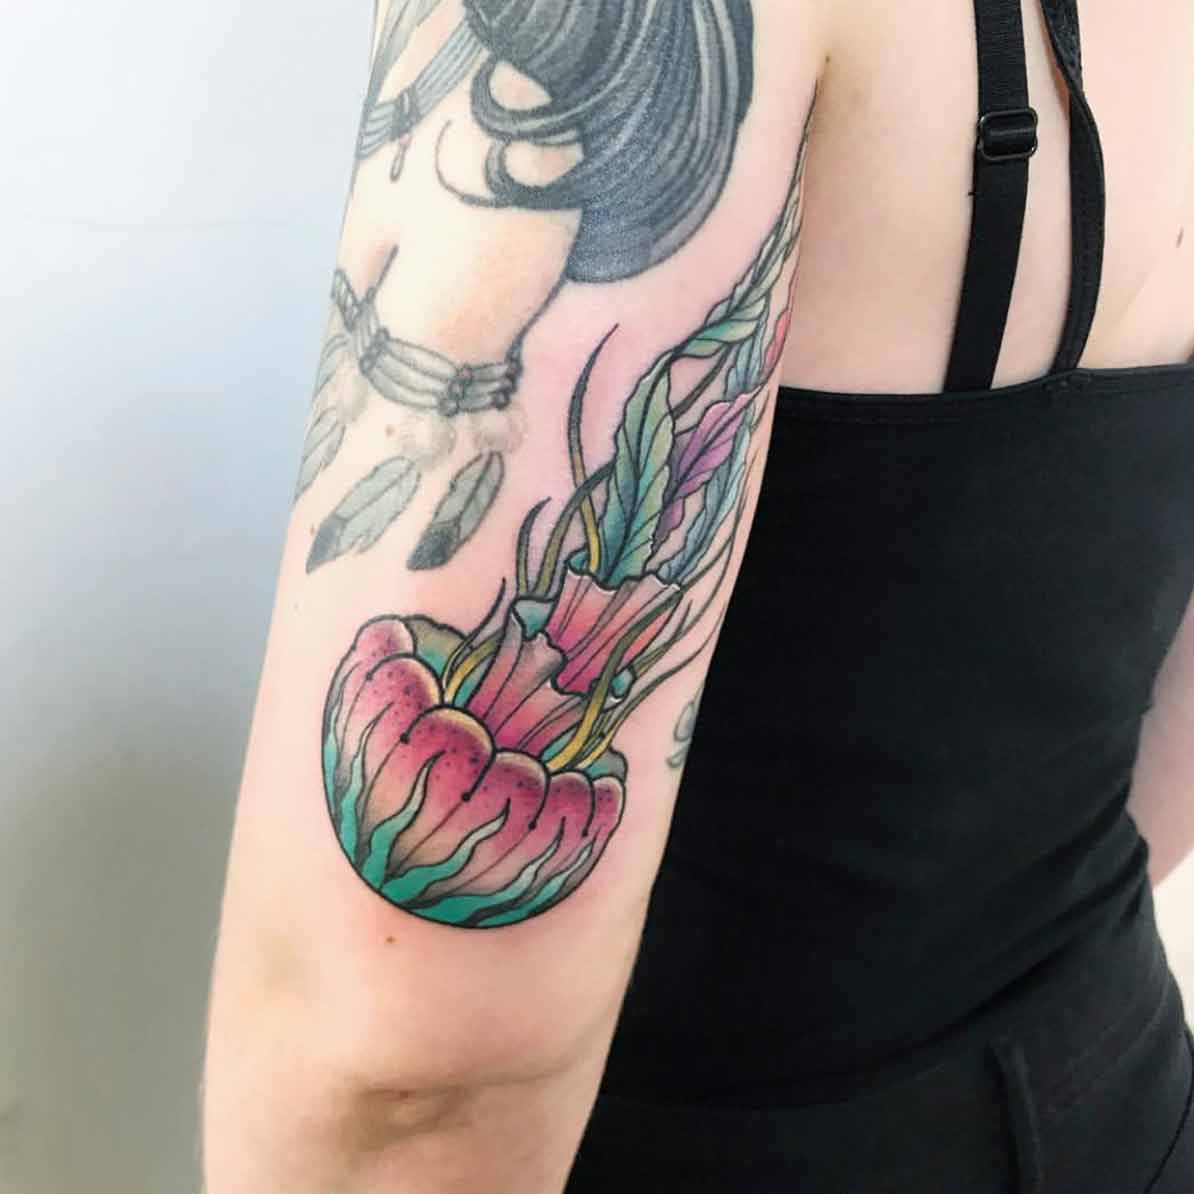 Tatuaje de medusa realizado con la maquina de tatuaje ultra ligera.